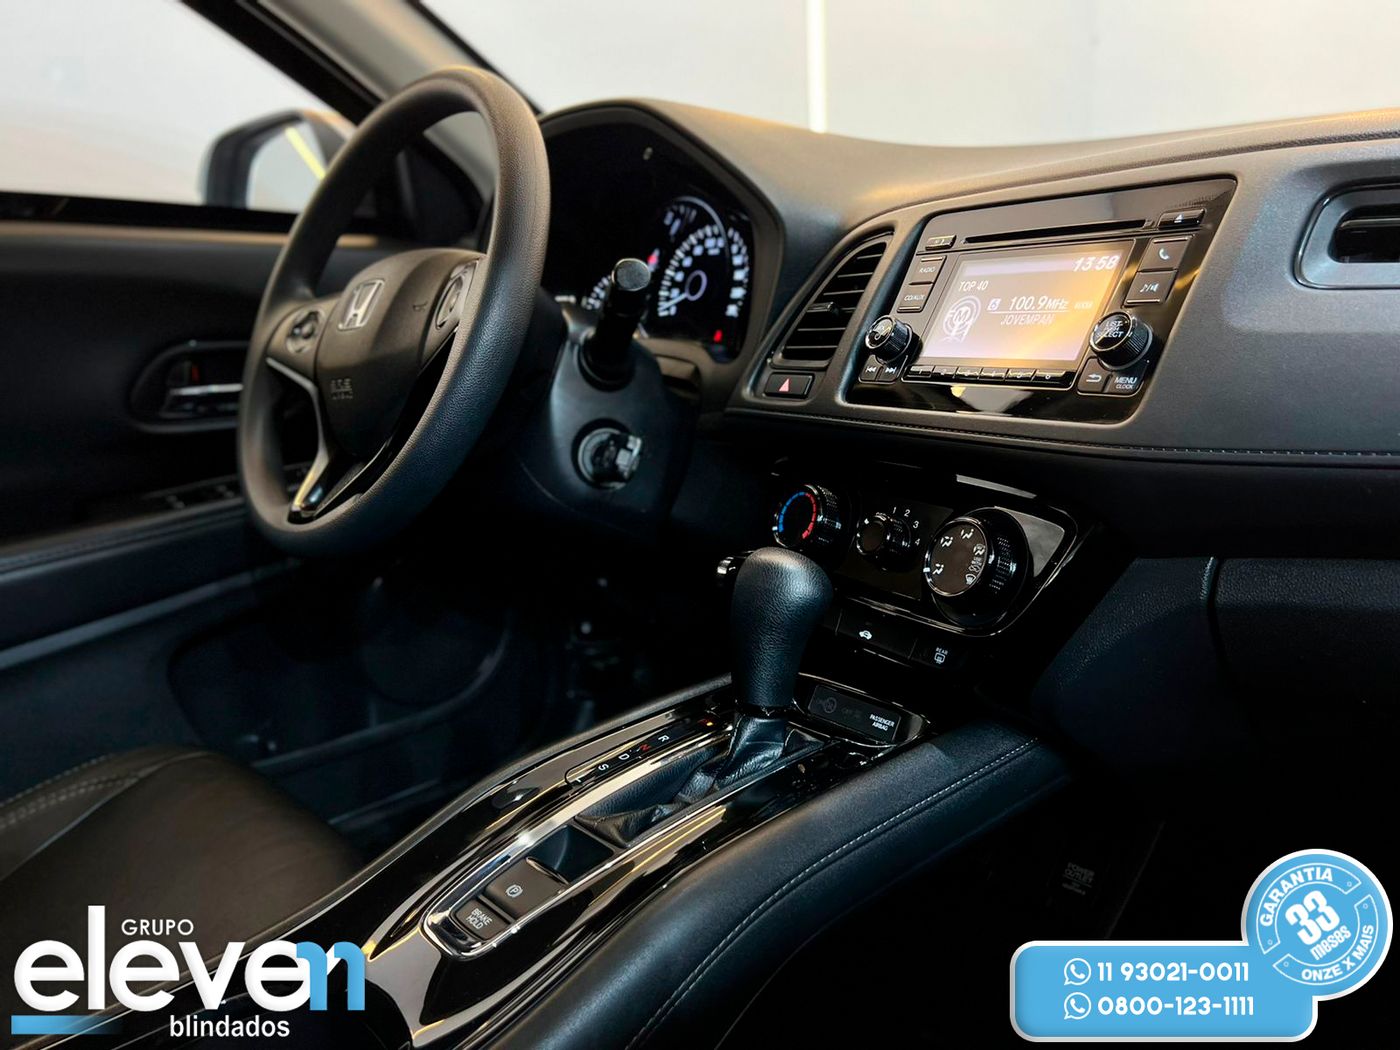 Honda HR-V LX 1.8 Flexone 16V 5p Aut.